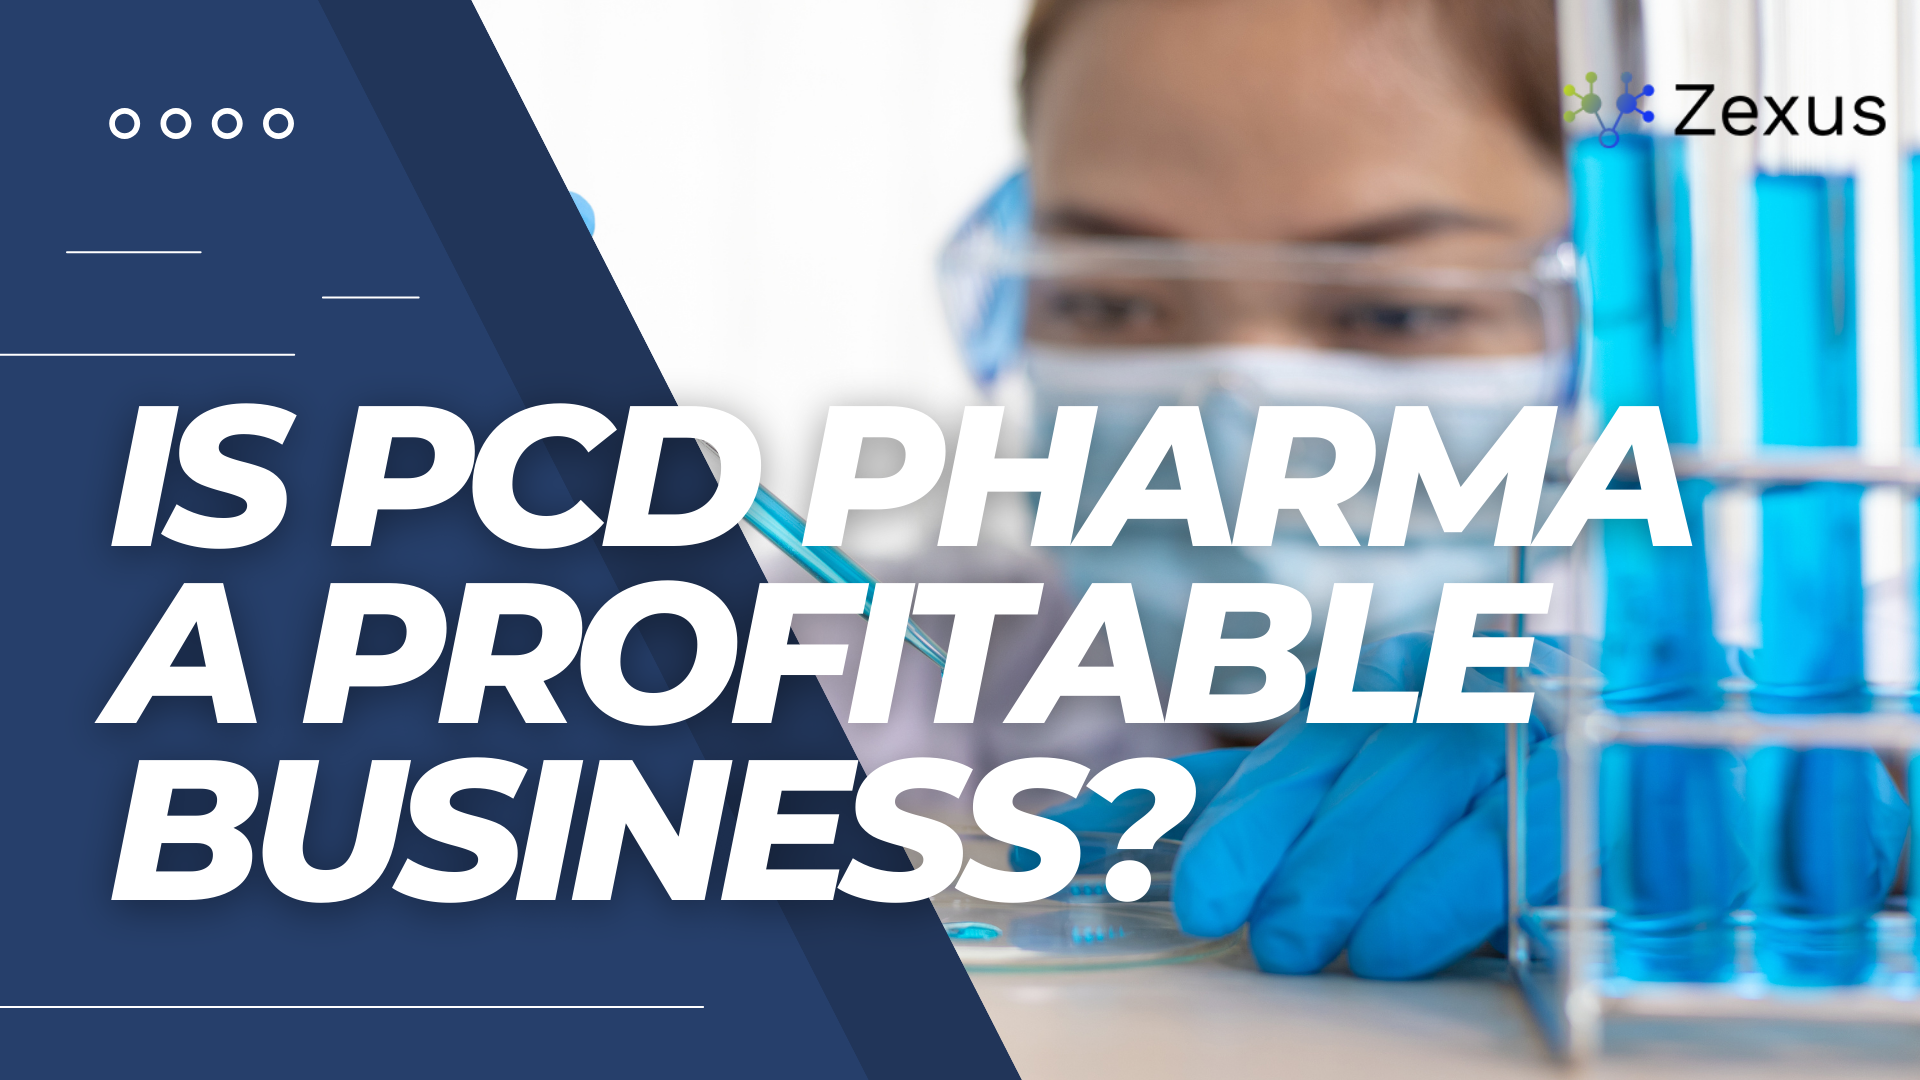 Is PCD Pharma A Profitable Business?